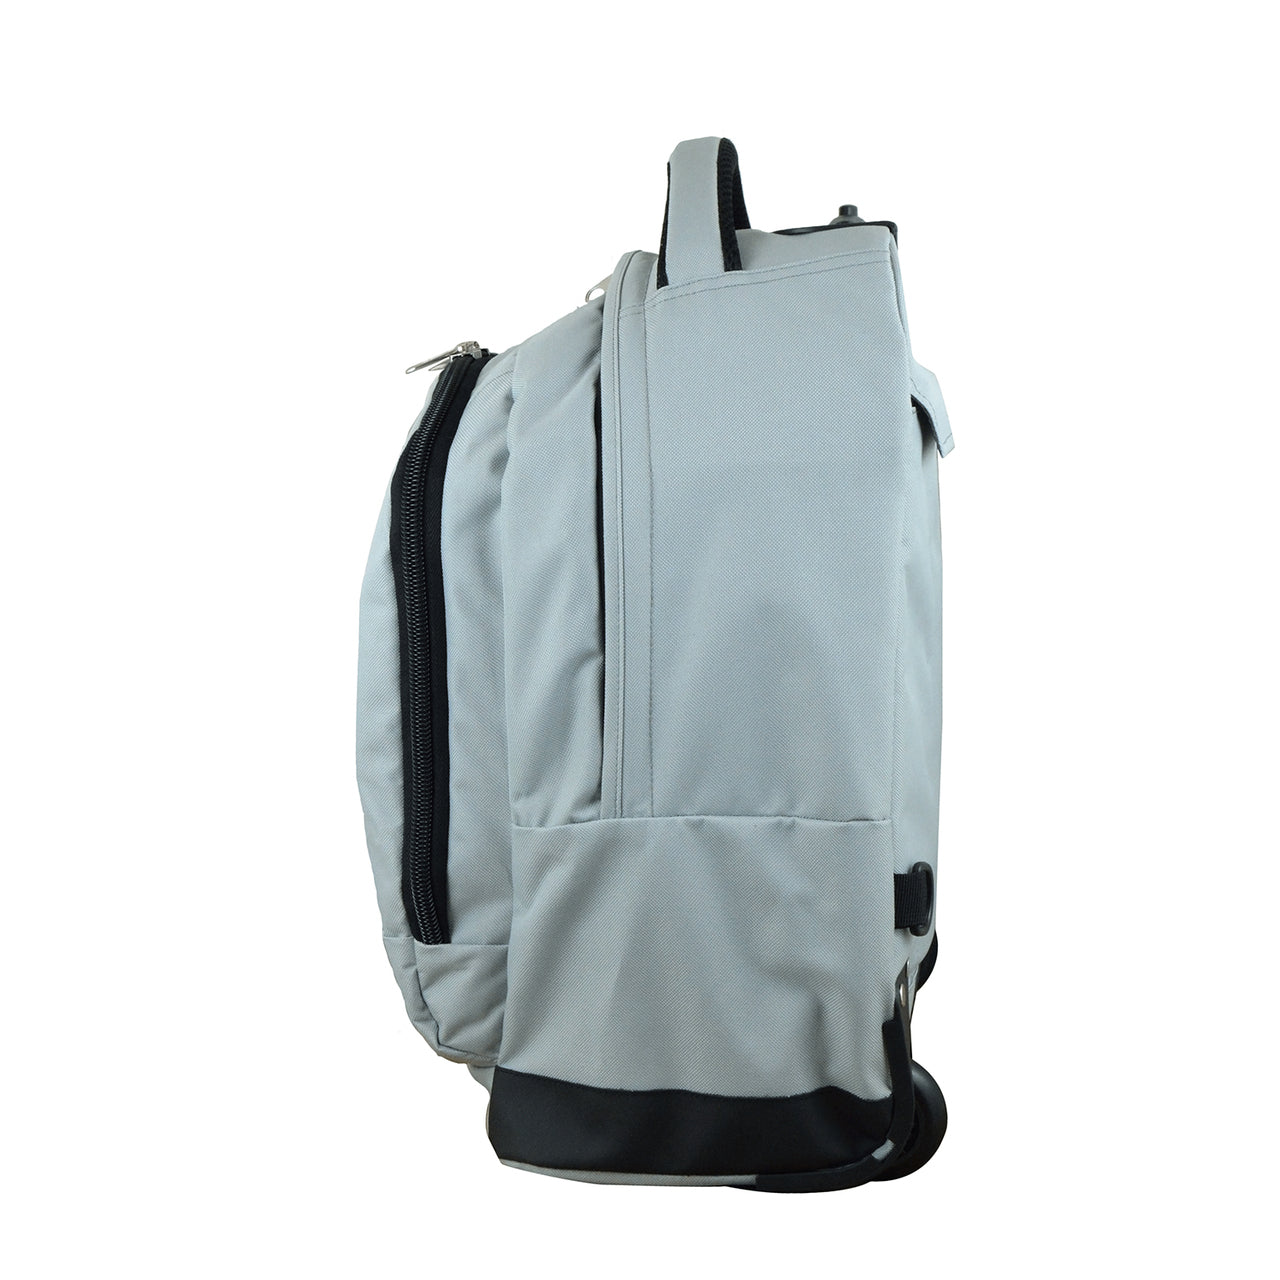 Detroit Red Wings Premium Wheeled Backpack in Grey